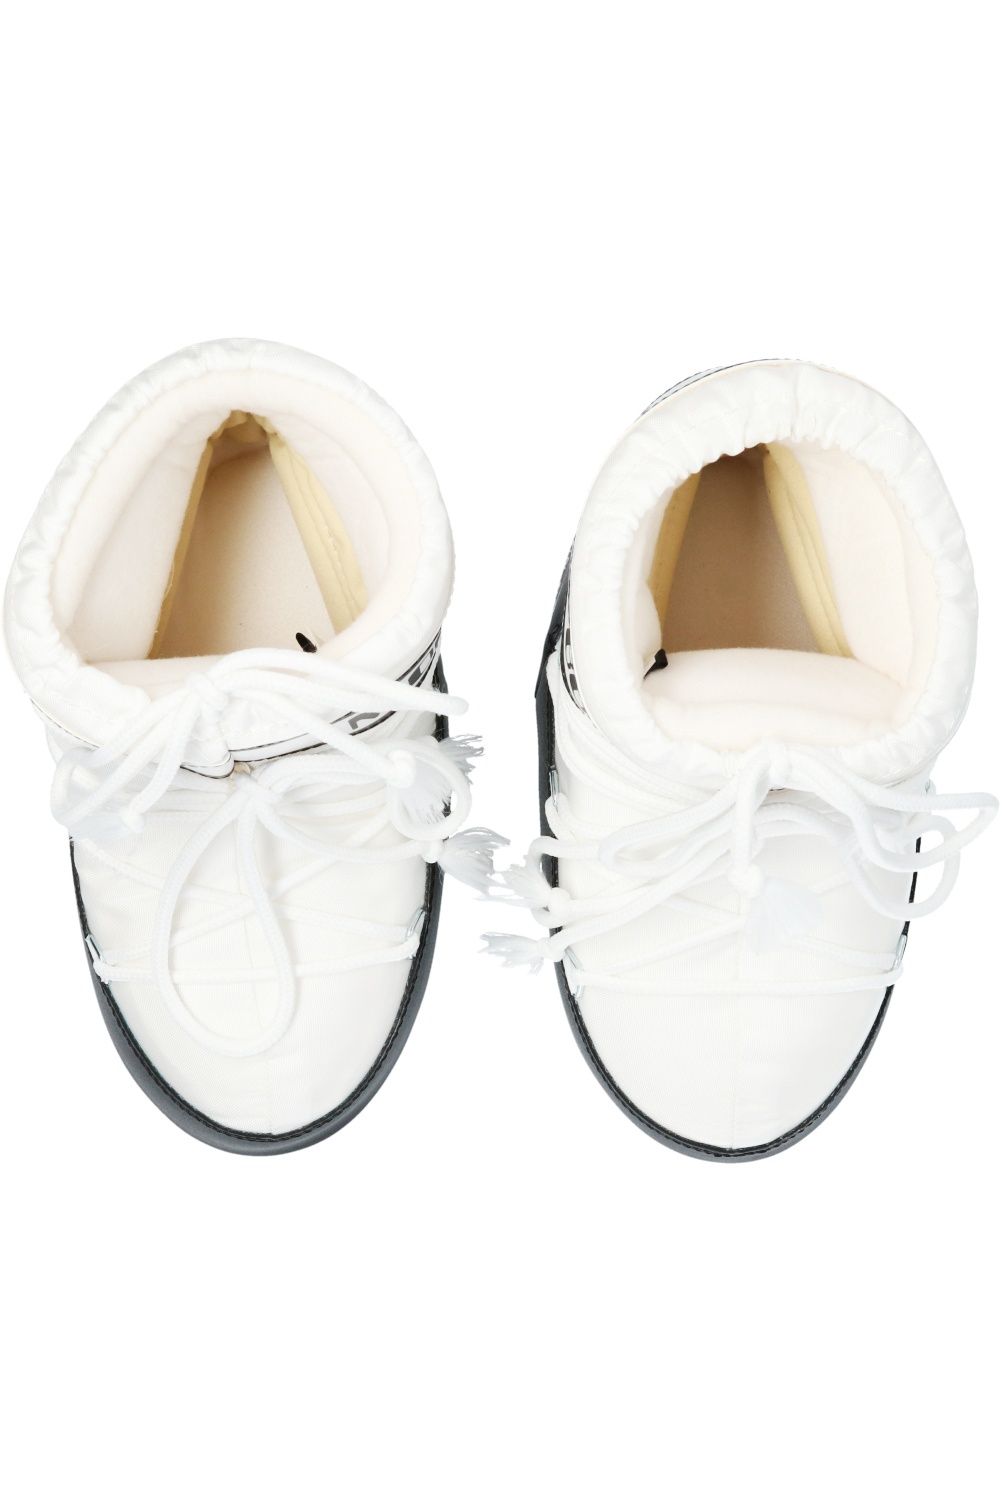 Reebok Zig 3D Storm Marathon Running Shoes Sneakers FX4391 ‘Classic Low’ snow boots